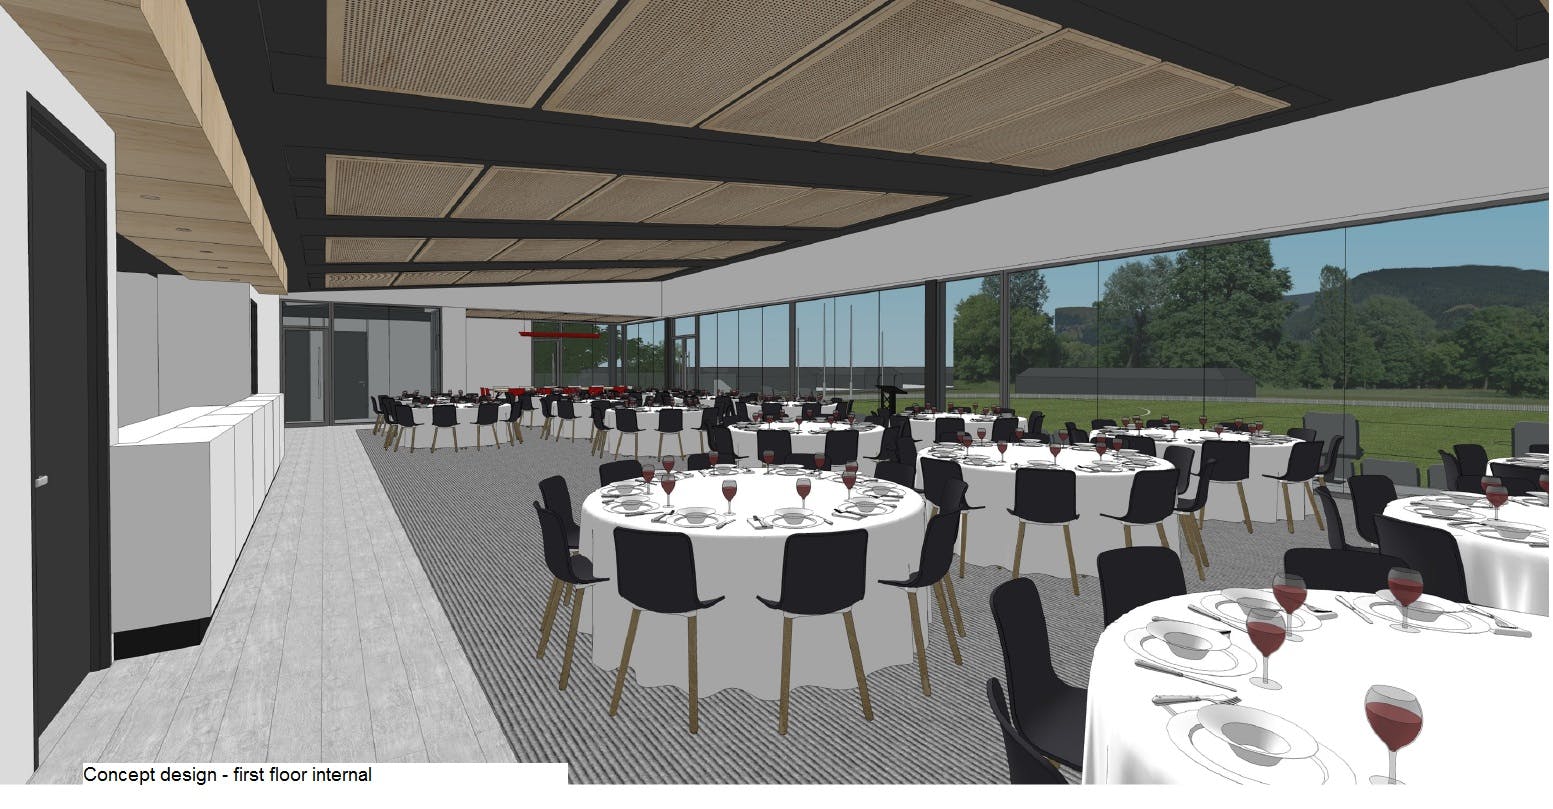 Concept Image of Goodwood Oval Grandstand first floor internal